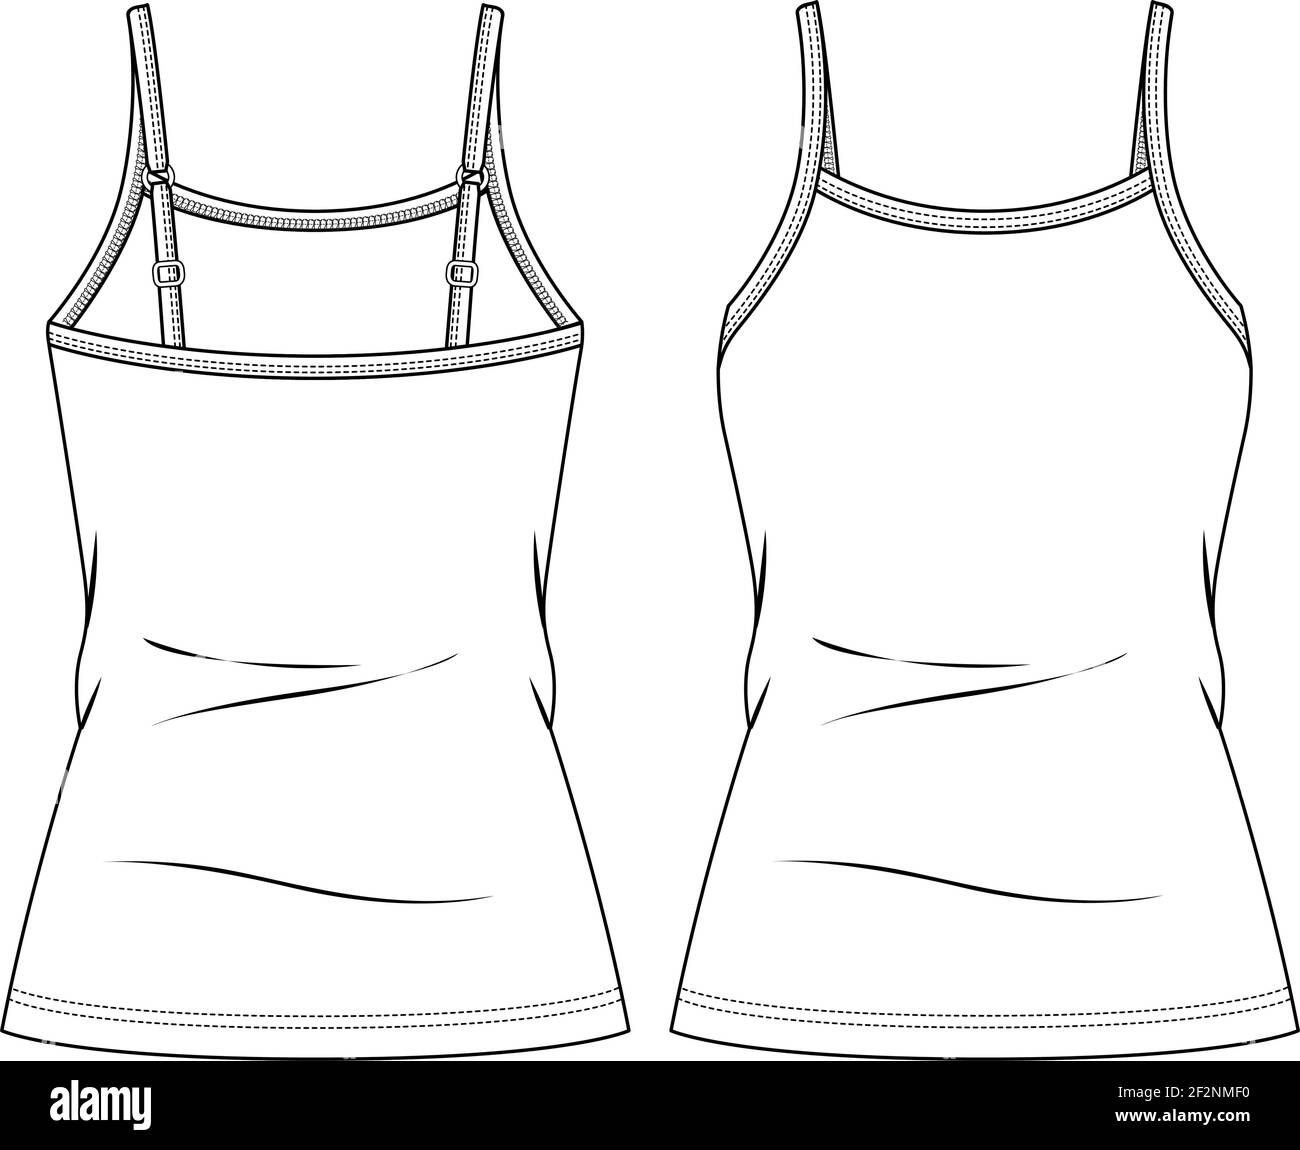 https://c8.alamy.com/comp/2F2NMF0/women-strappy-tank-top-fashion-flat-sketch-template-girls-technical-fashion-illustration-adjustable-straps-2F2NMF0.jpg